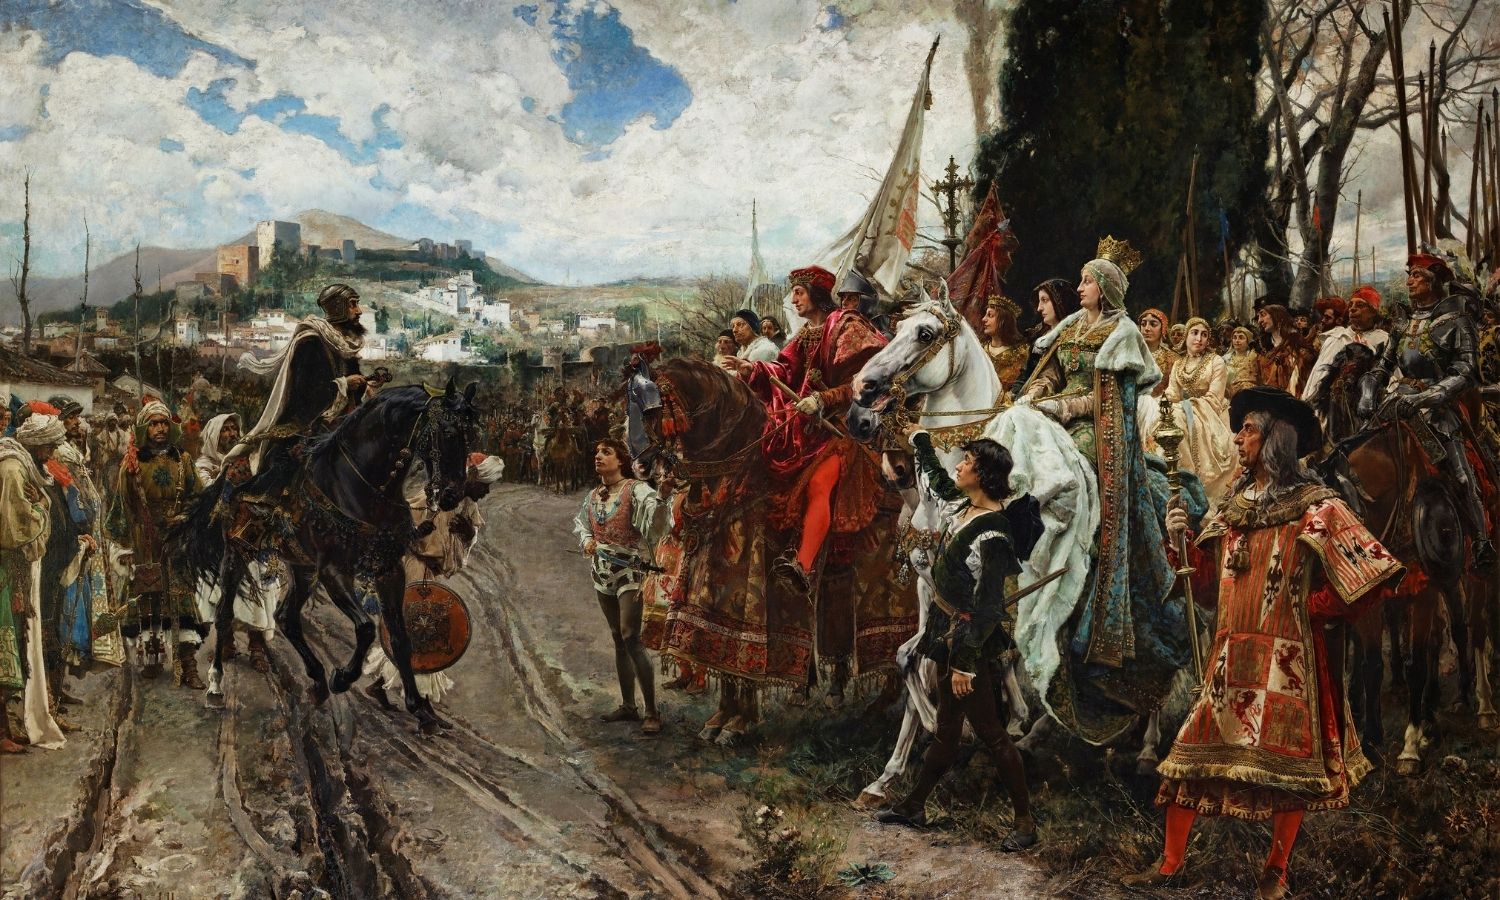 OTD in 1491: The Treaty of Granada was signed